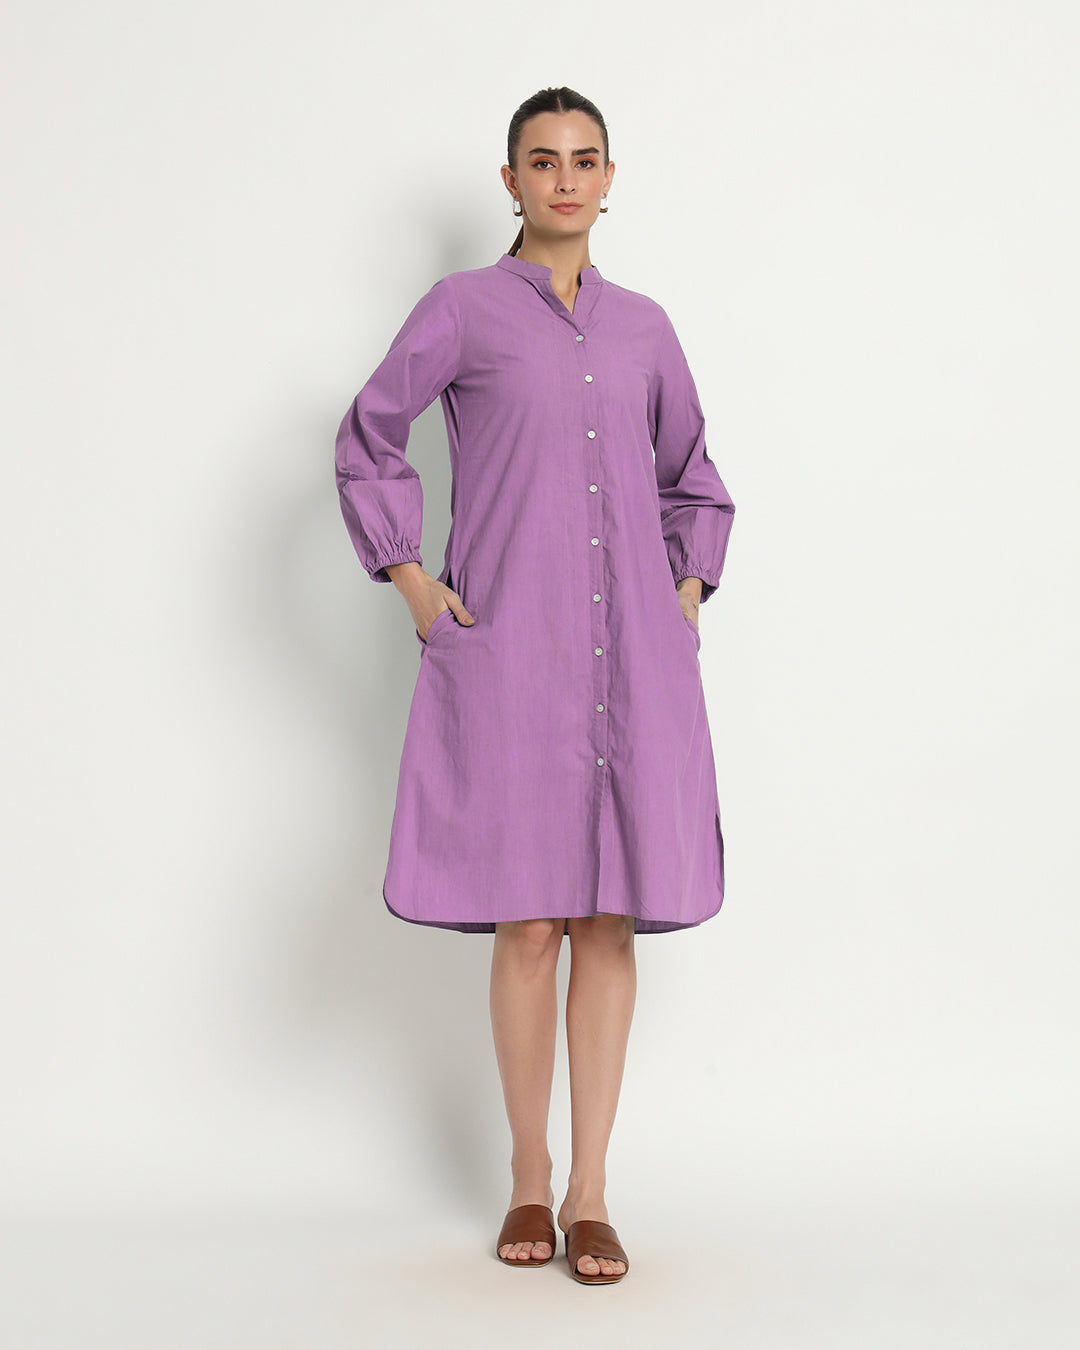 Wisteria Purple Modish Elegance Notch Neck Dress